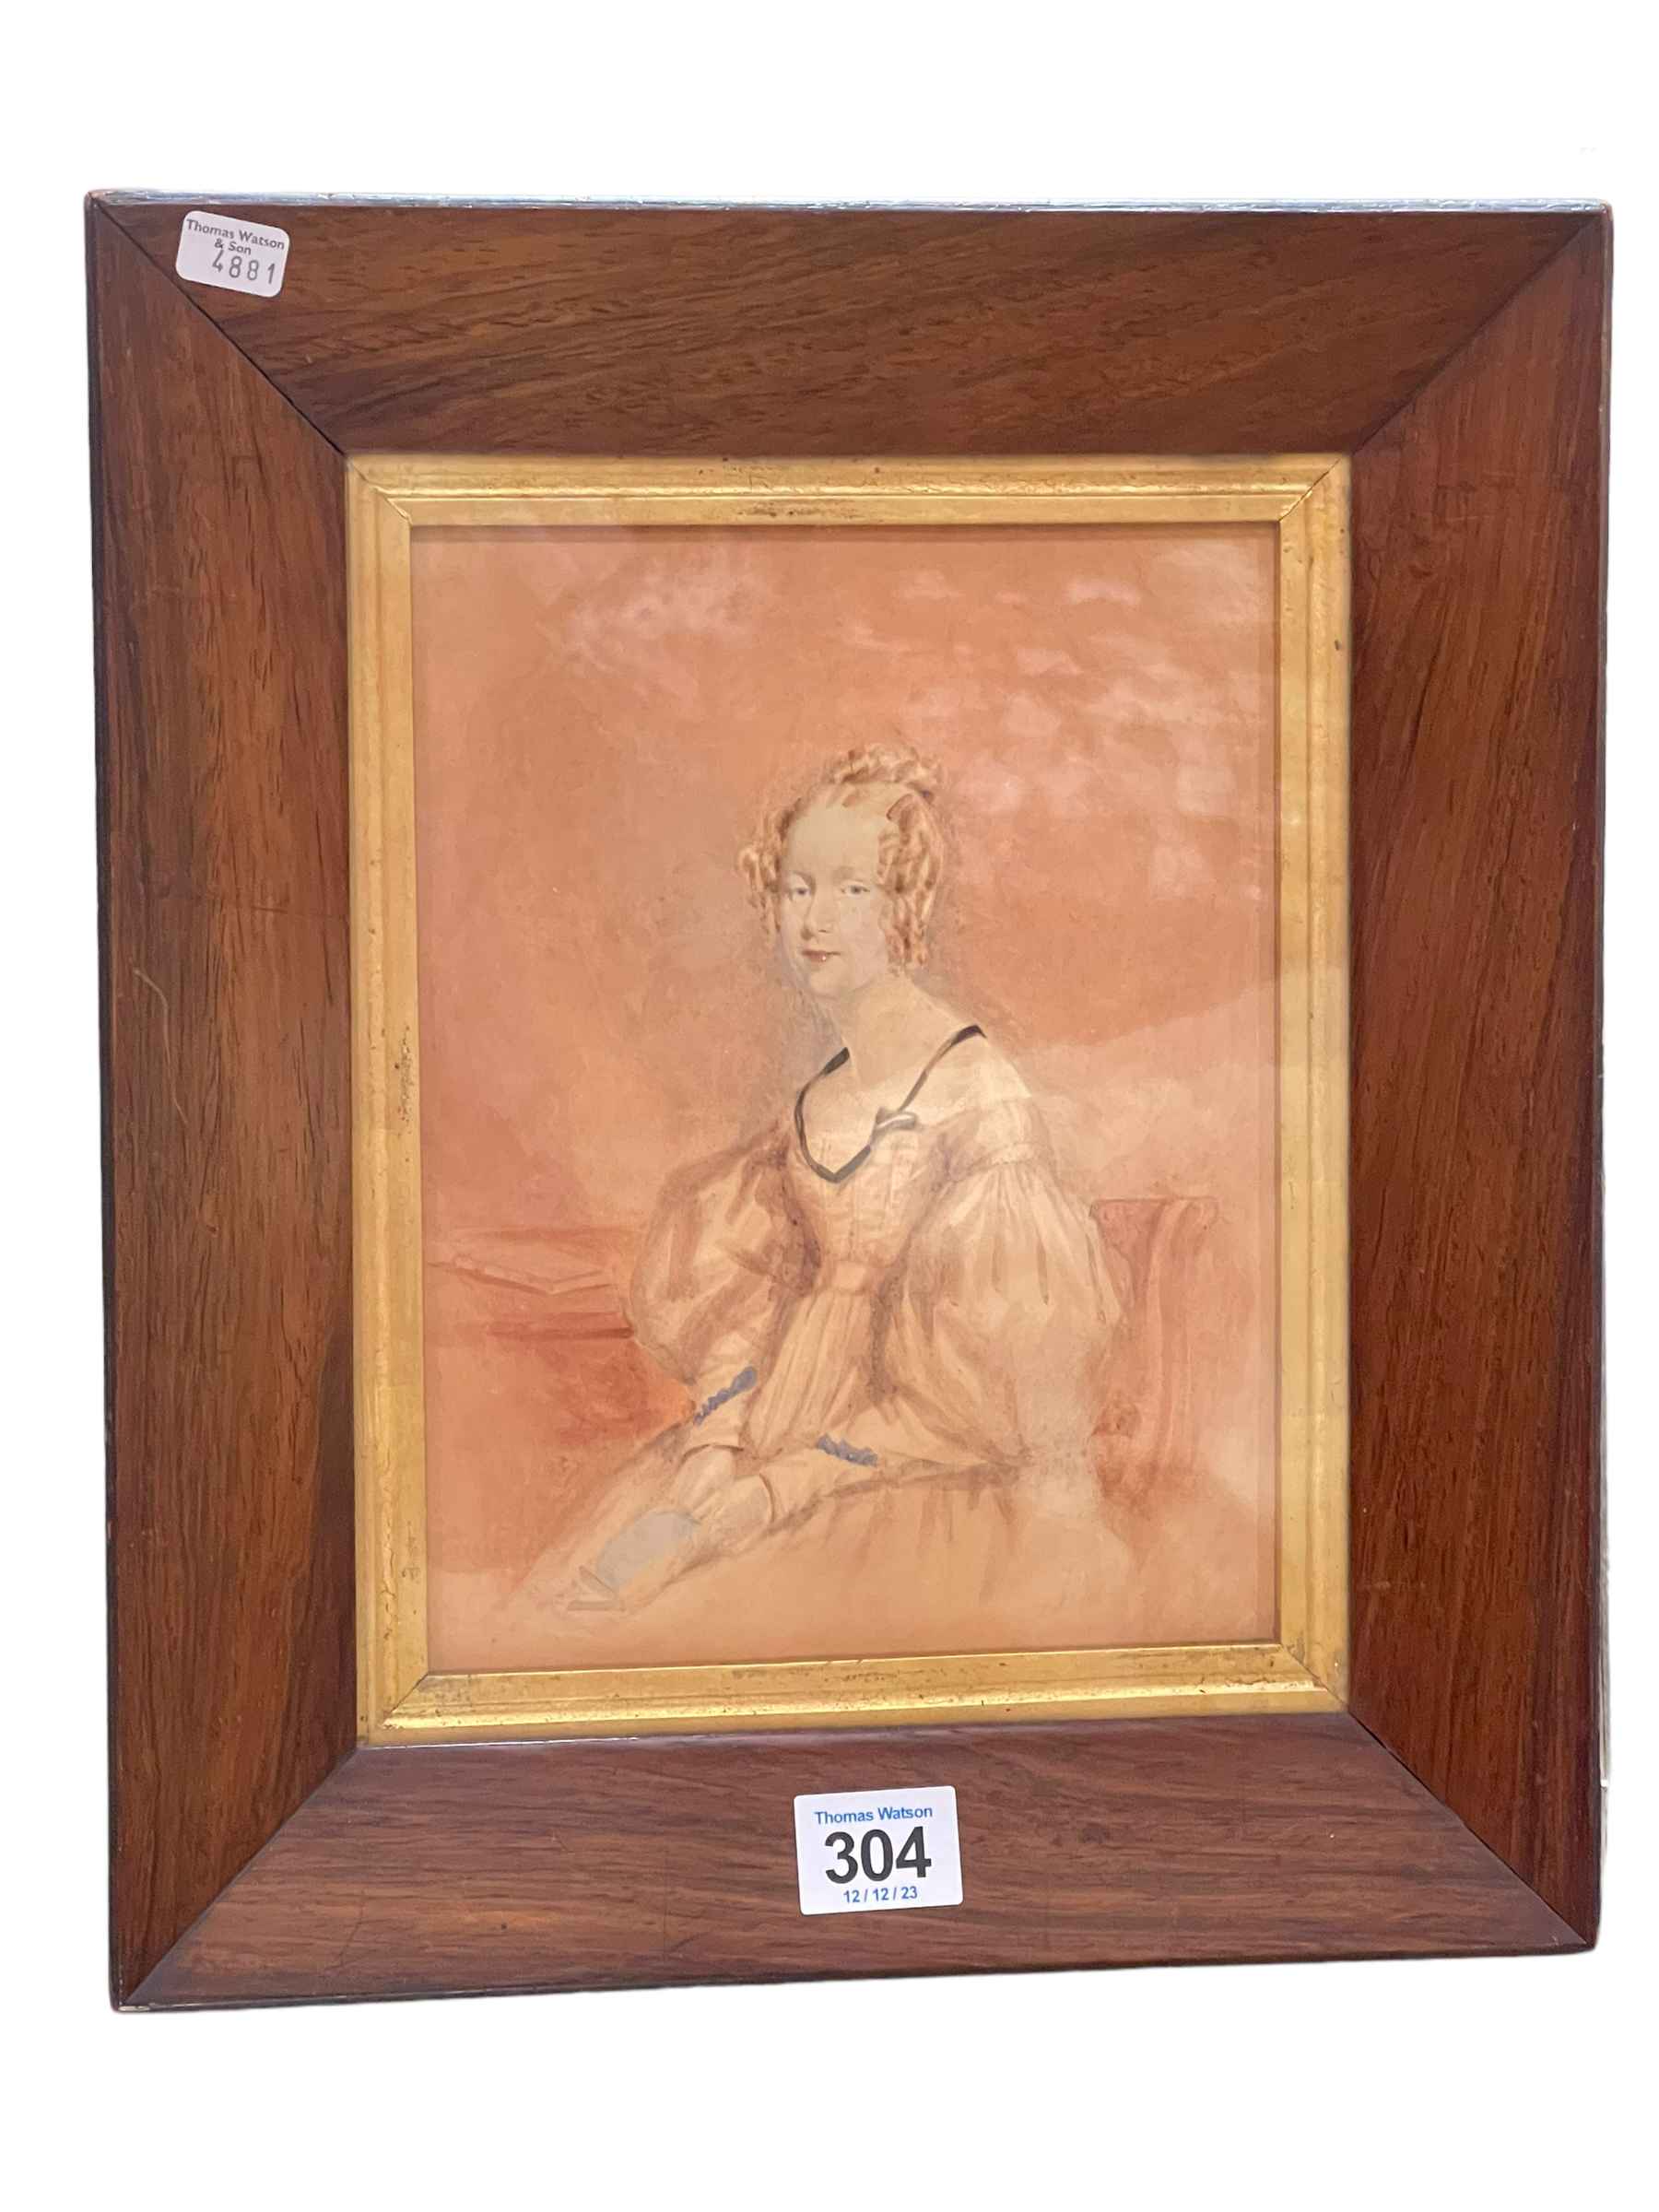 H. Love (1780-1838), Portrait of Miss Elizabeth Jarvis in rosewood frame, 33cm by 29cm, info verso.